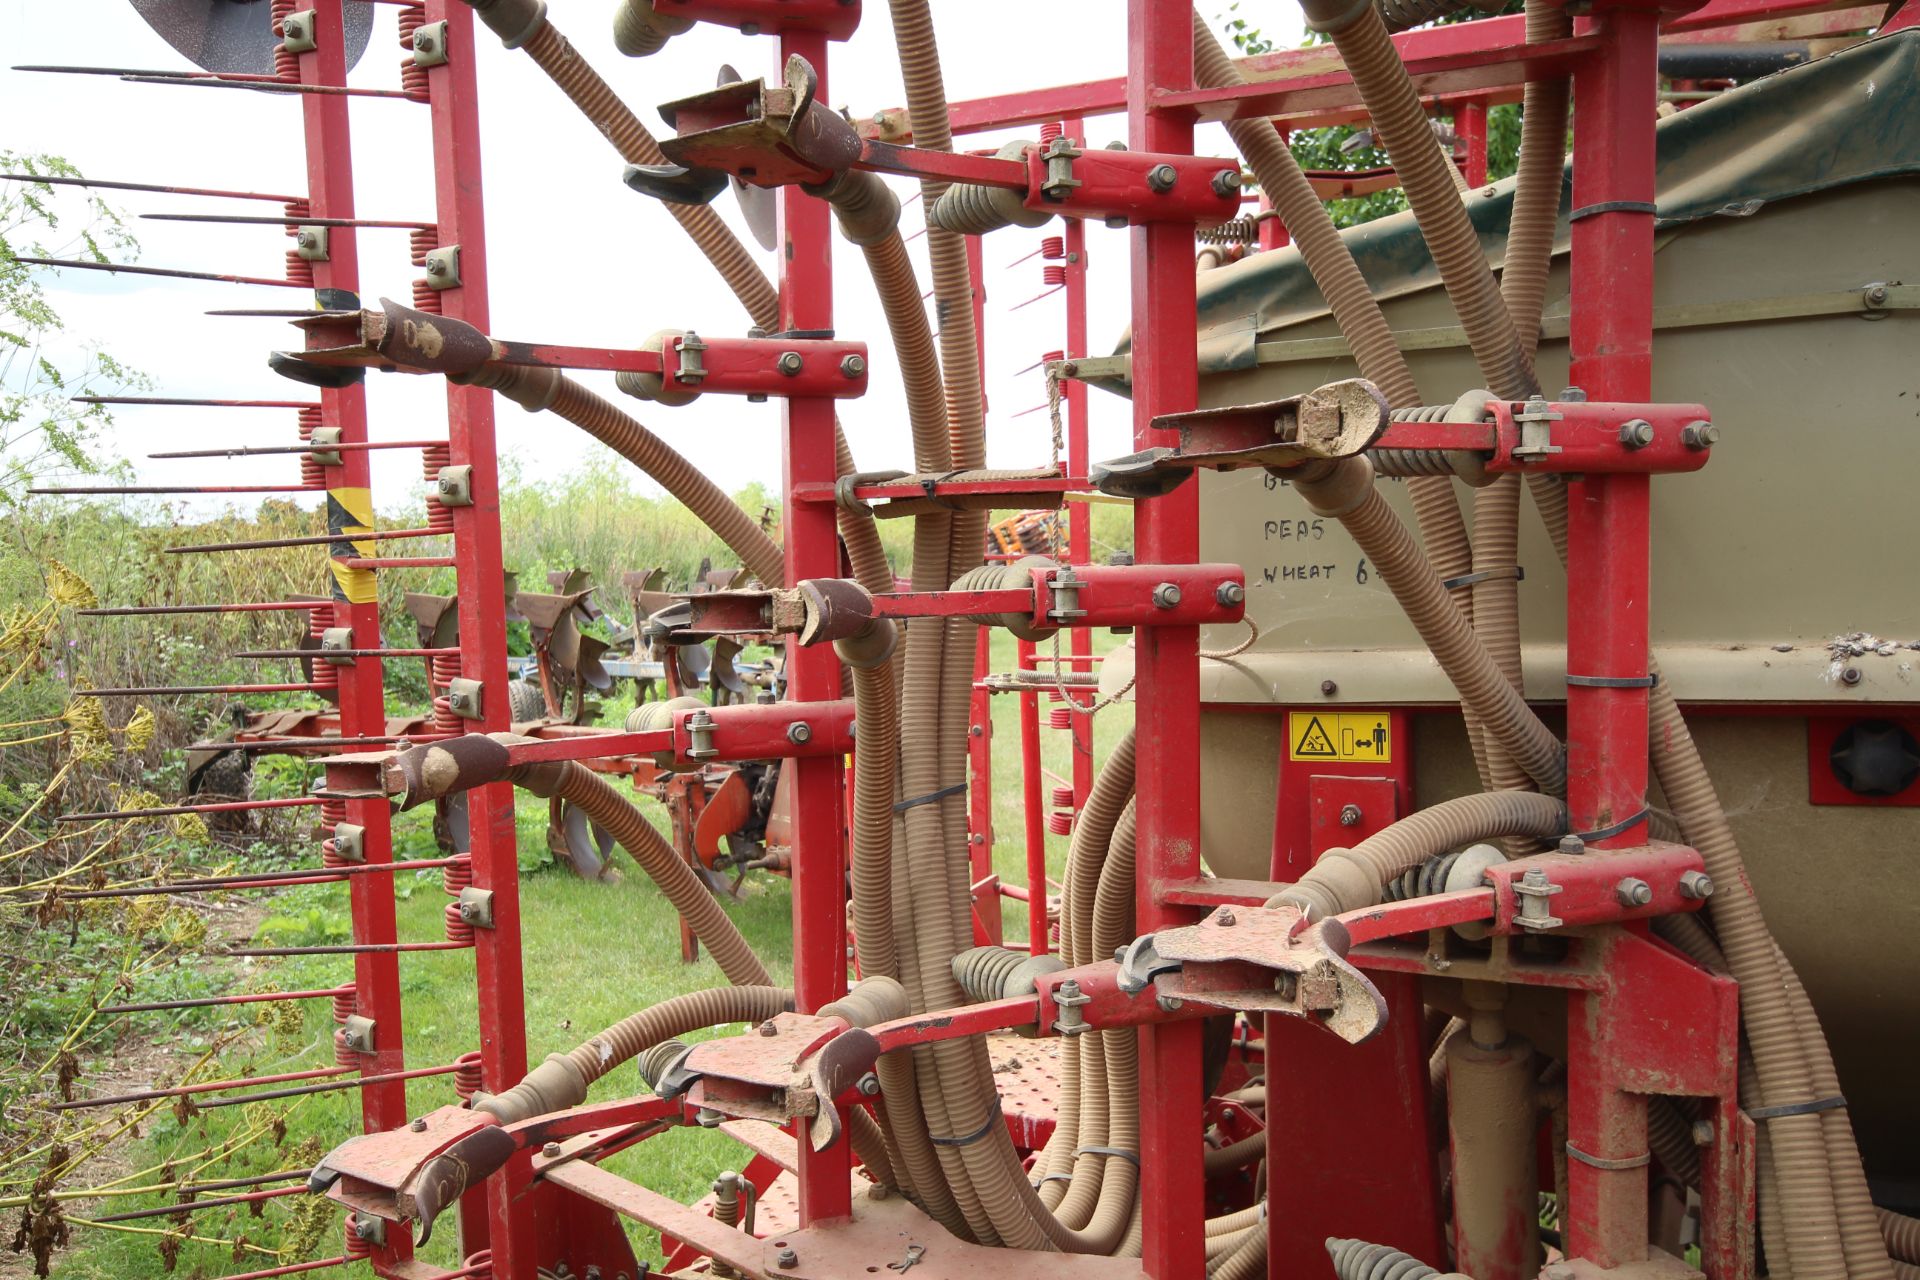 Weaving 6m hydraulic folding tine drill. With wheel track eradicator, covering harrow tramline and - Image 13 of 31